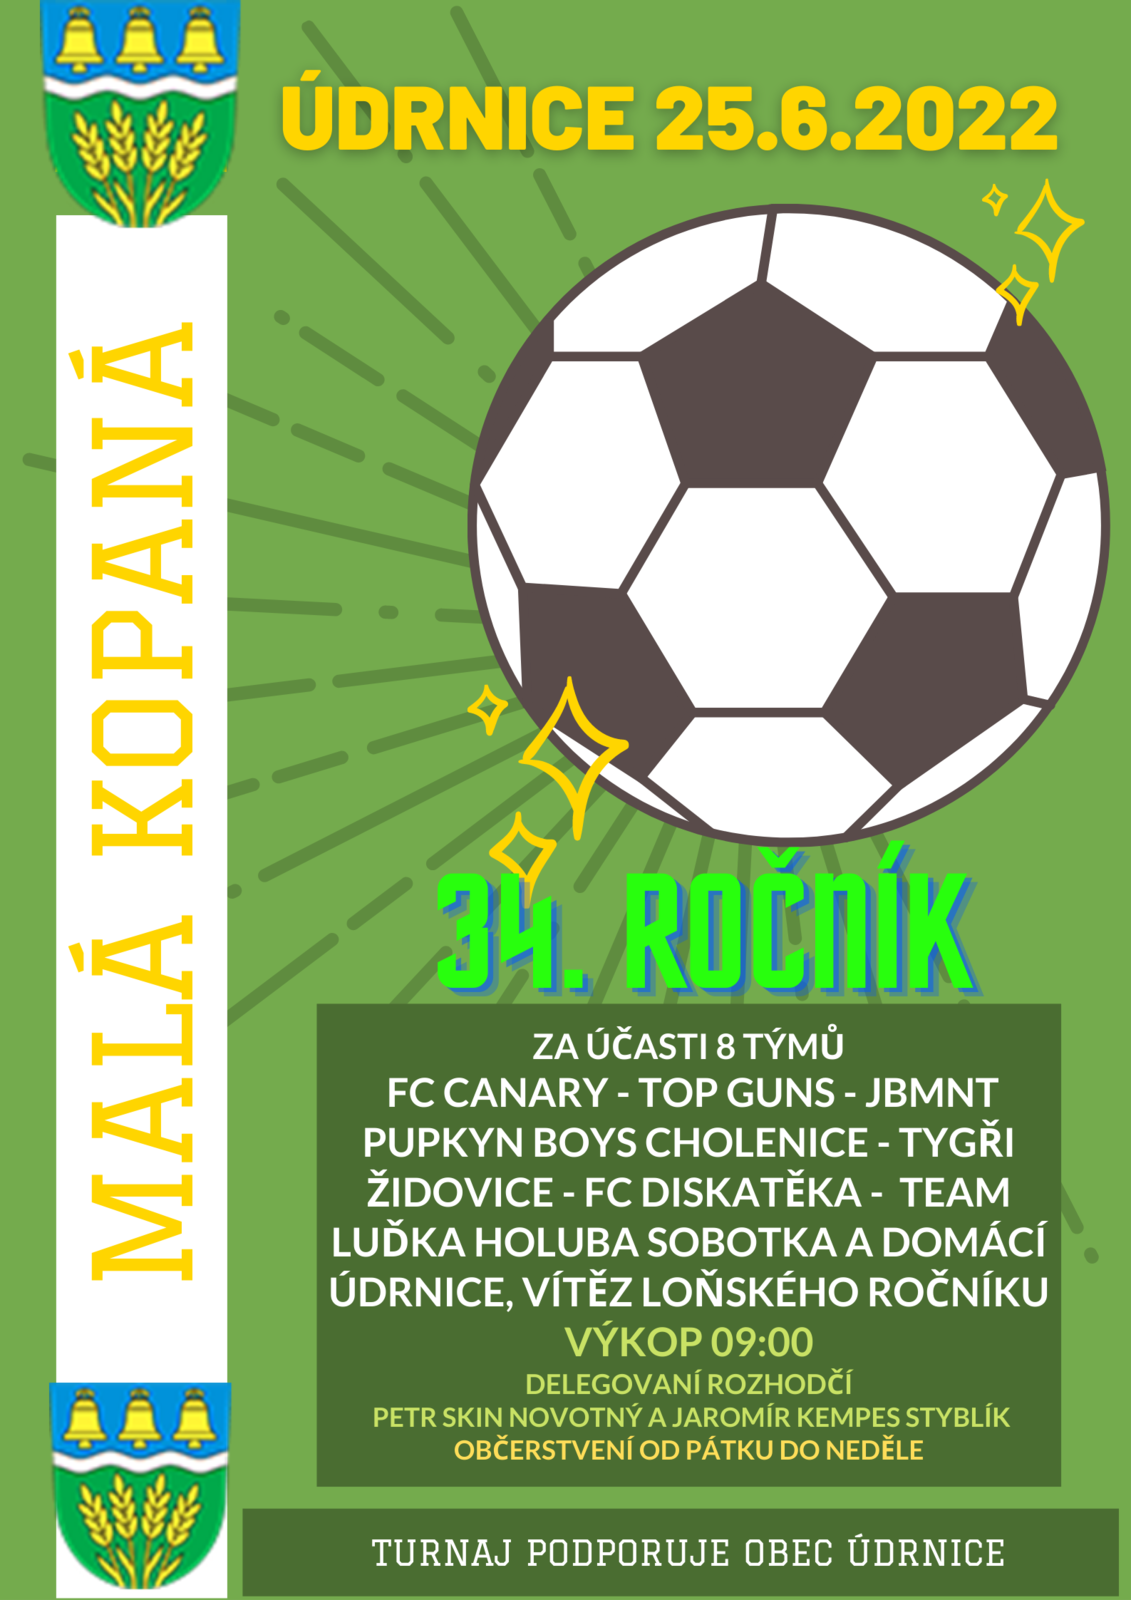 Football (Soccer) Match Poster (2).png